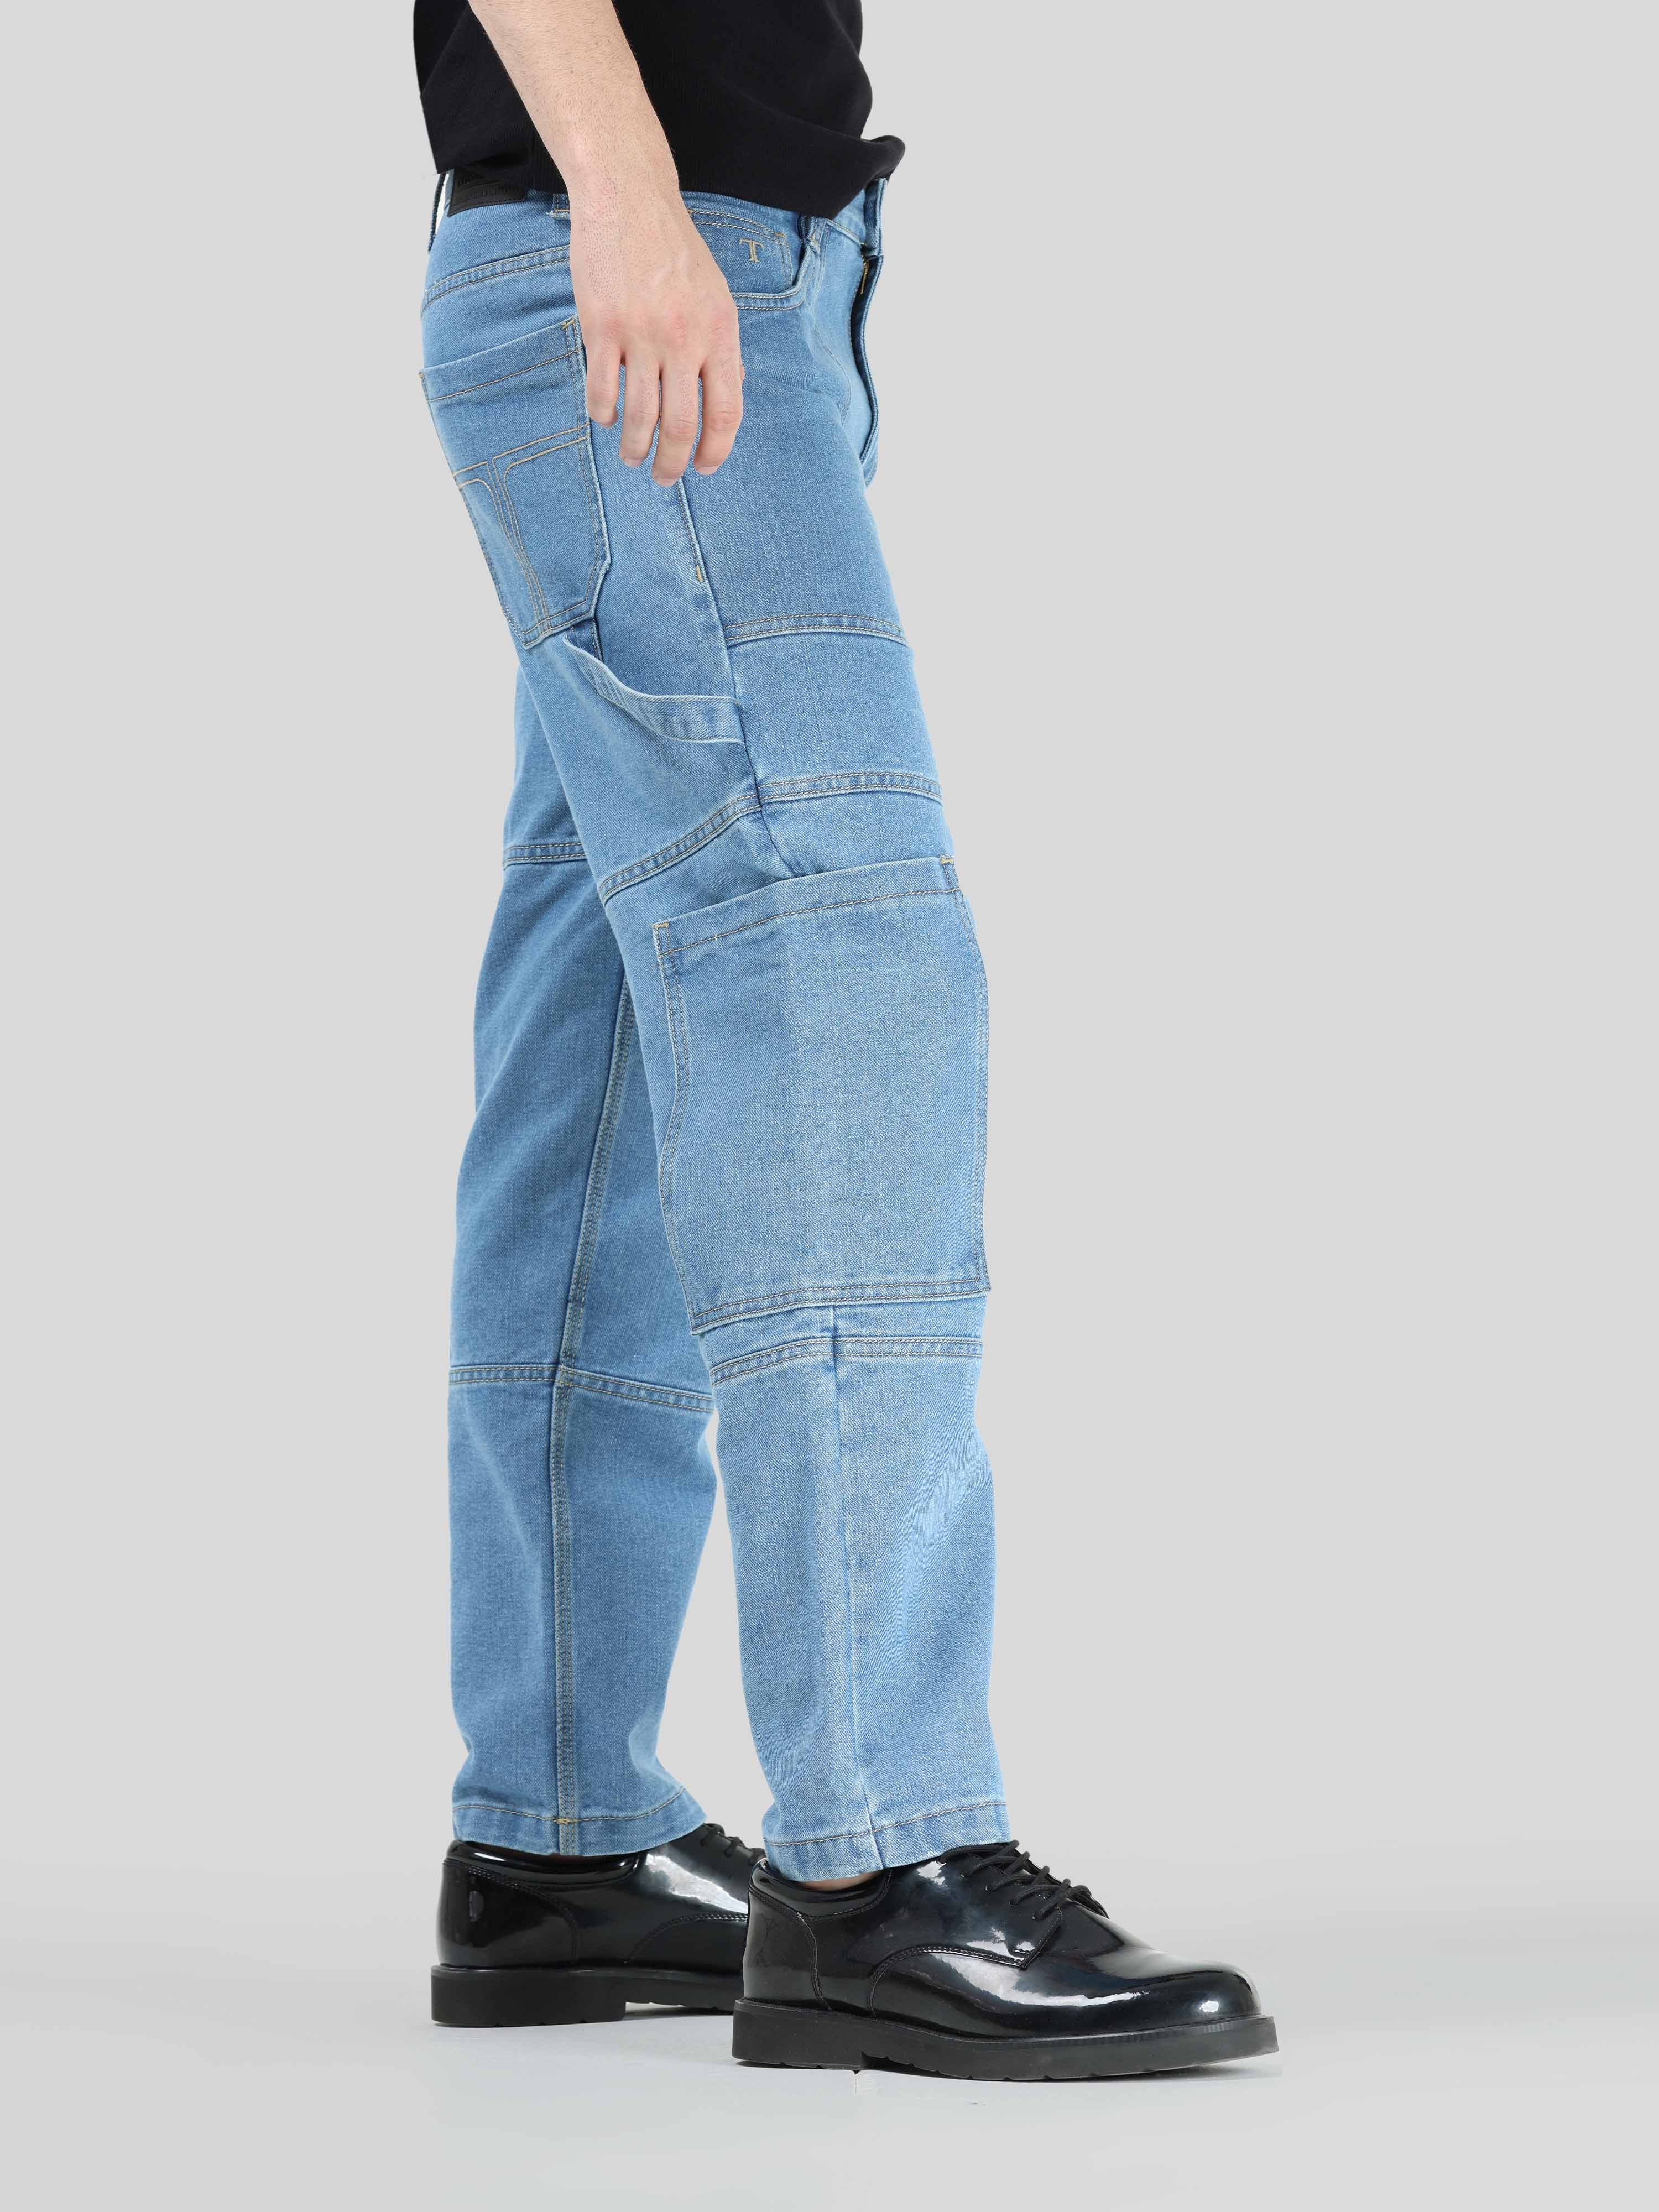 Plain Comfort Fit Men Denim Cargo Jeans, Blue at Rs 1096/piece in